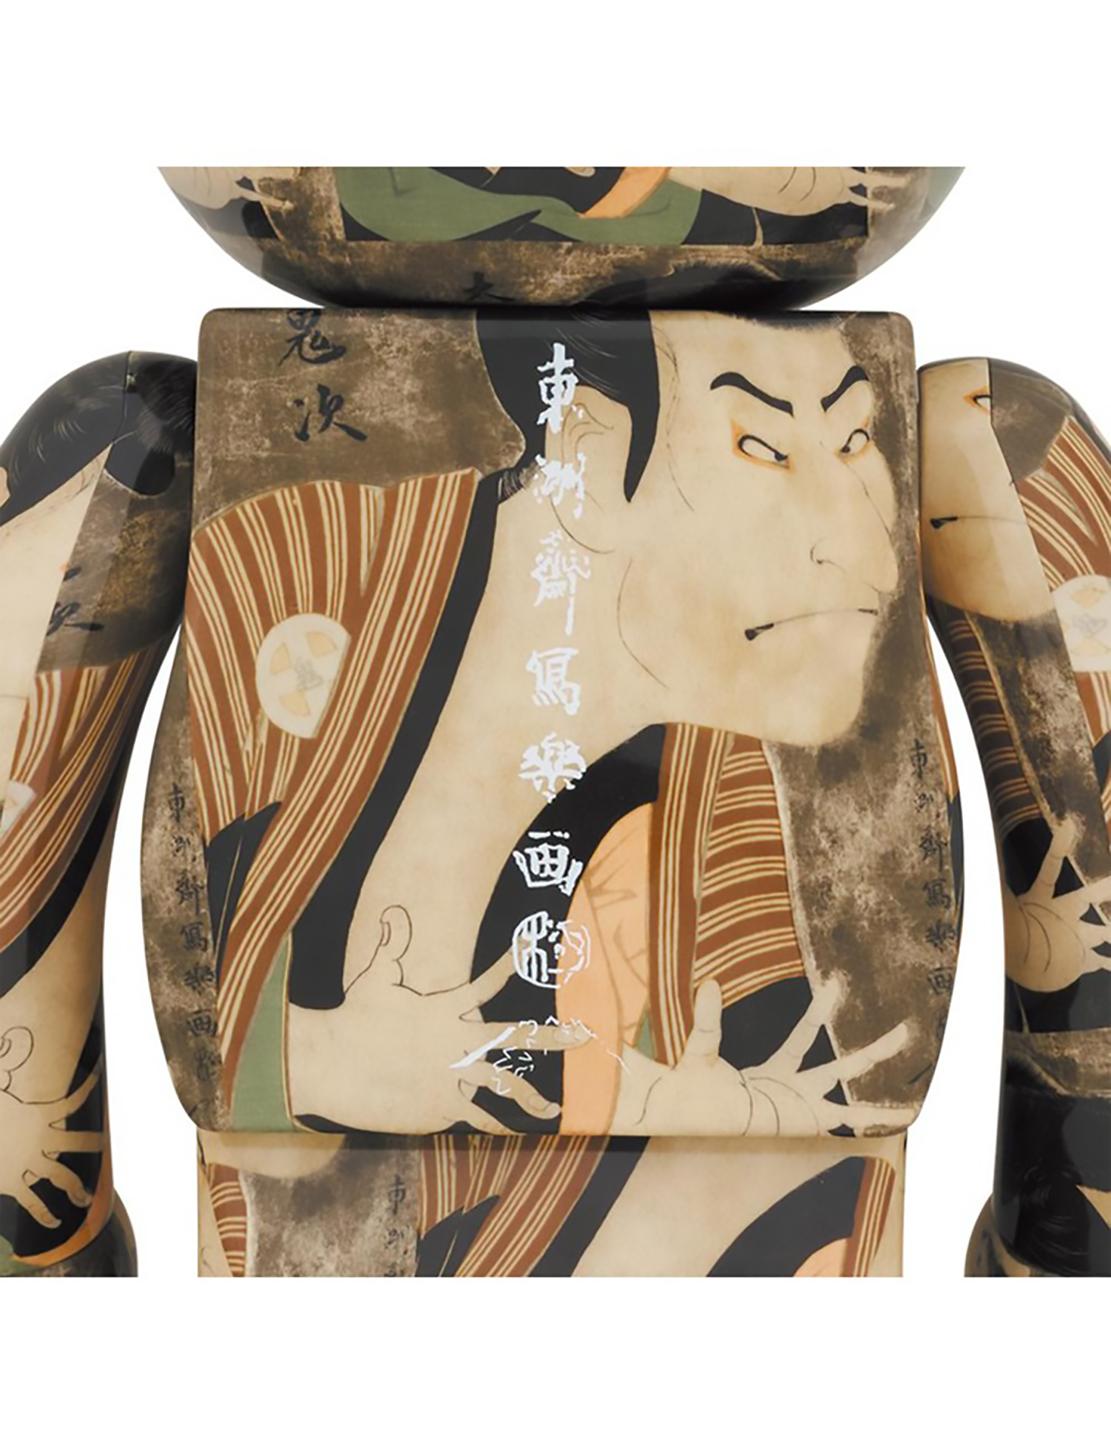 Toshusai Sharaku Bearbrick 400 % Kunstspielzeug (Toshusai Sharaku Be@rbrick) (Pop-Art), Sculpture, von Unknown